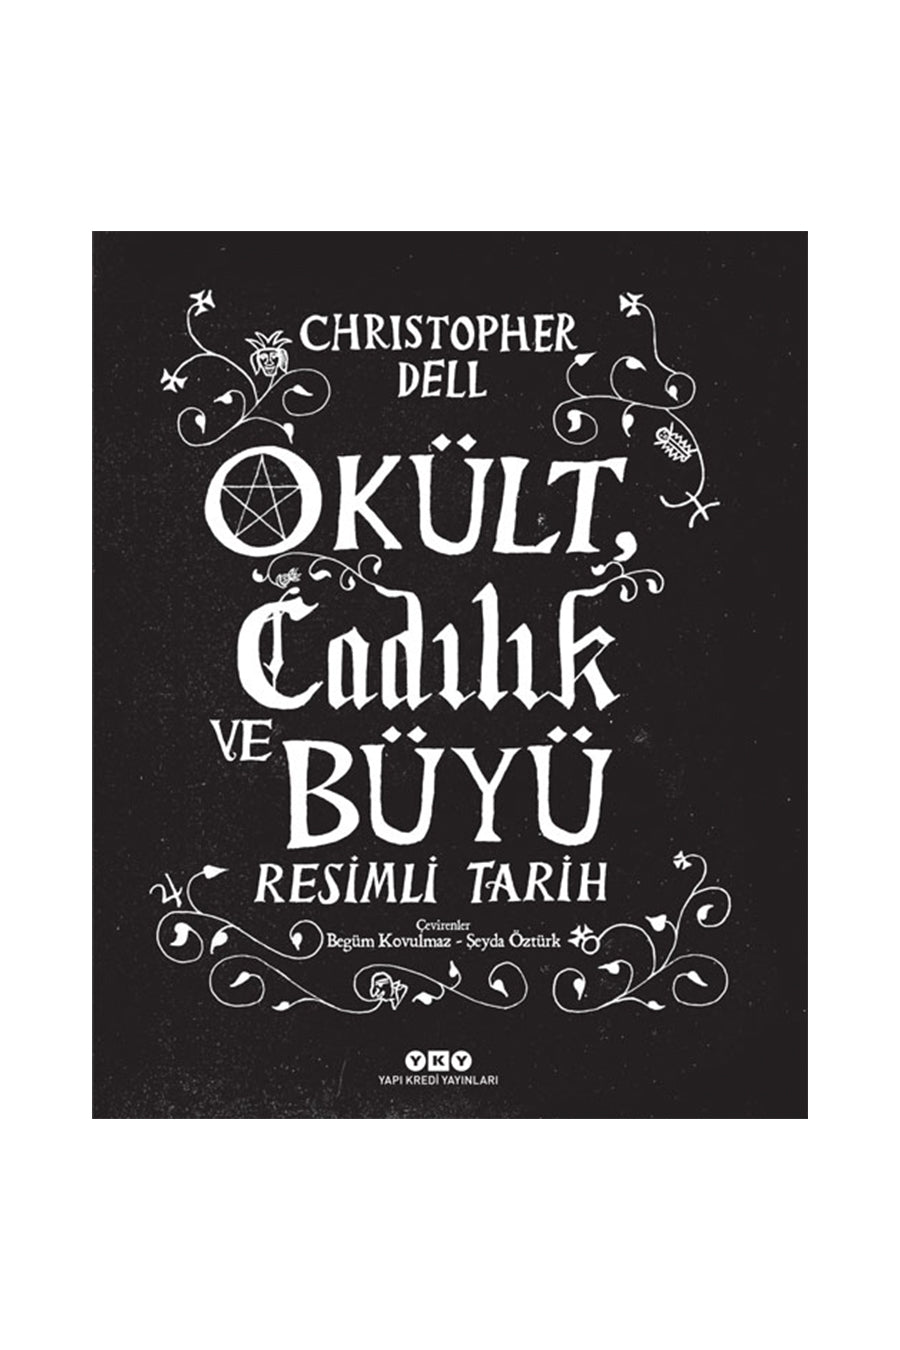 Okült, Cadılık ve Büyü - Christopher Dell